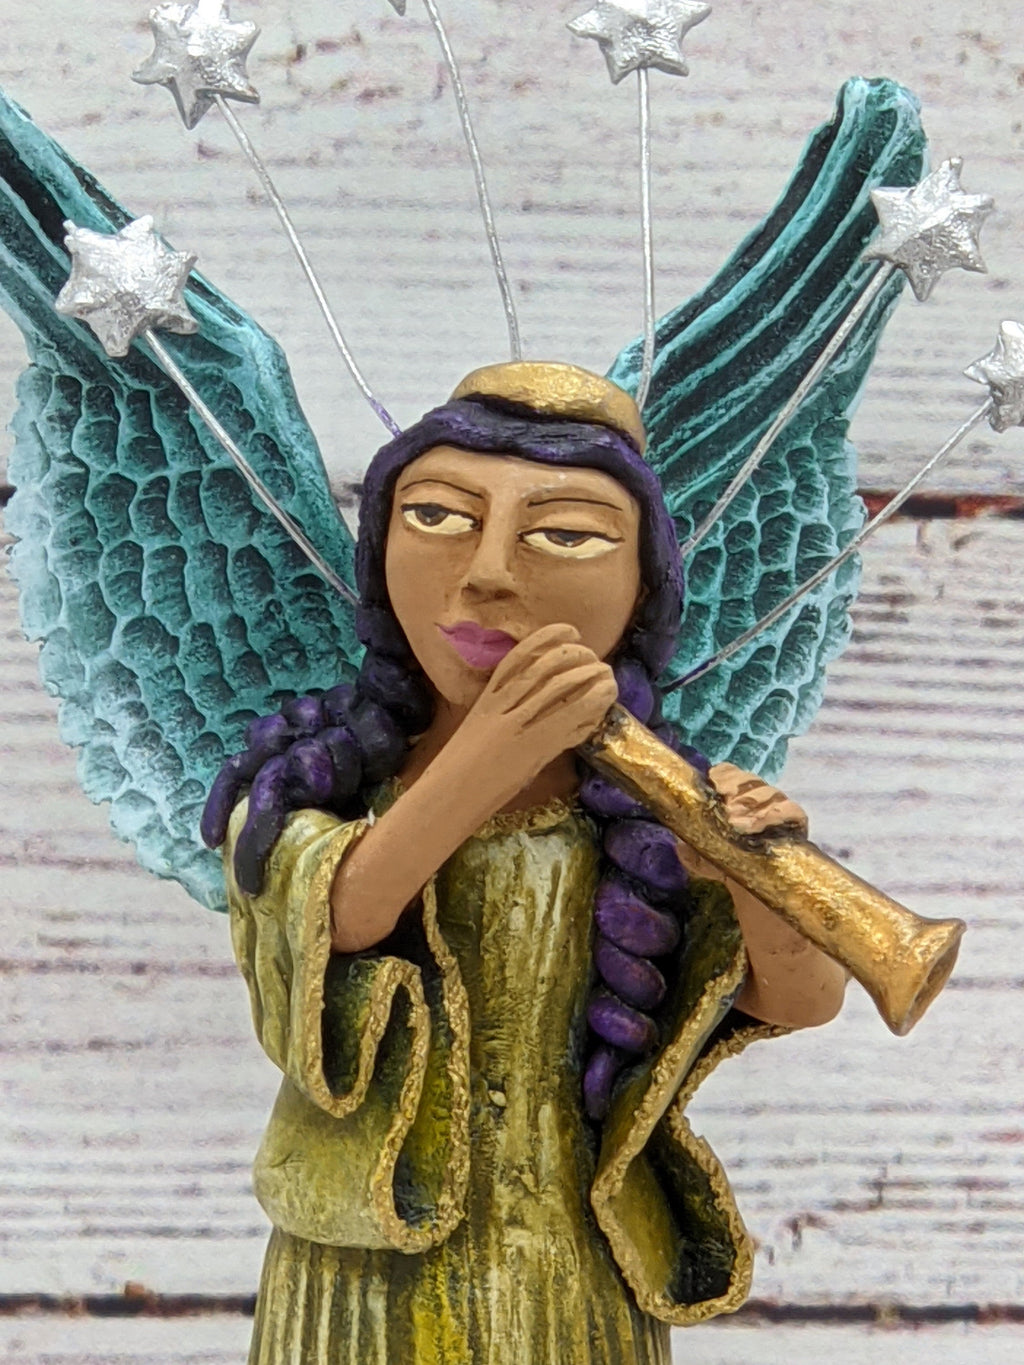 Christmas Decorations, Angel with Flute, Christmas Angel Home Decor, Handmade Angel Art from Oaxaca Mexico, Original Sculpture